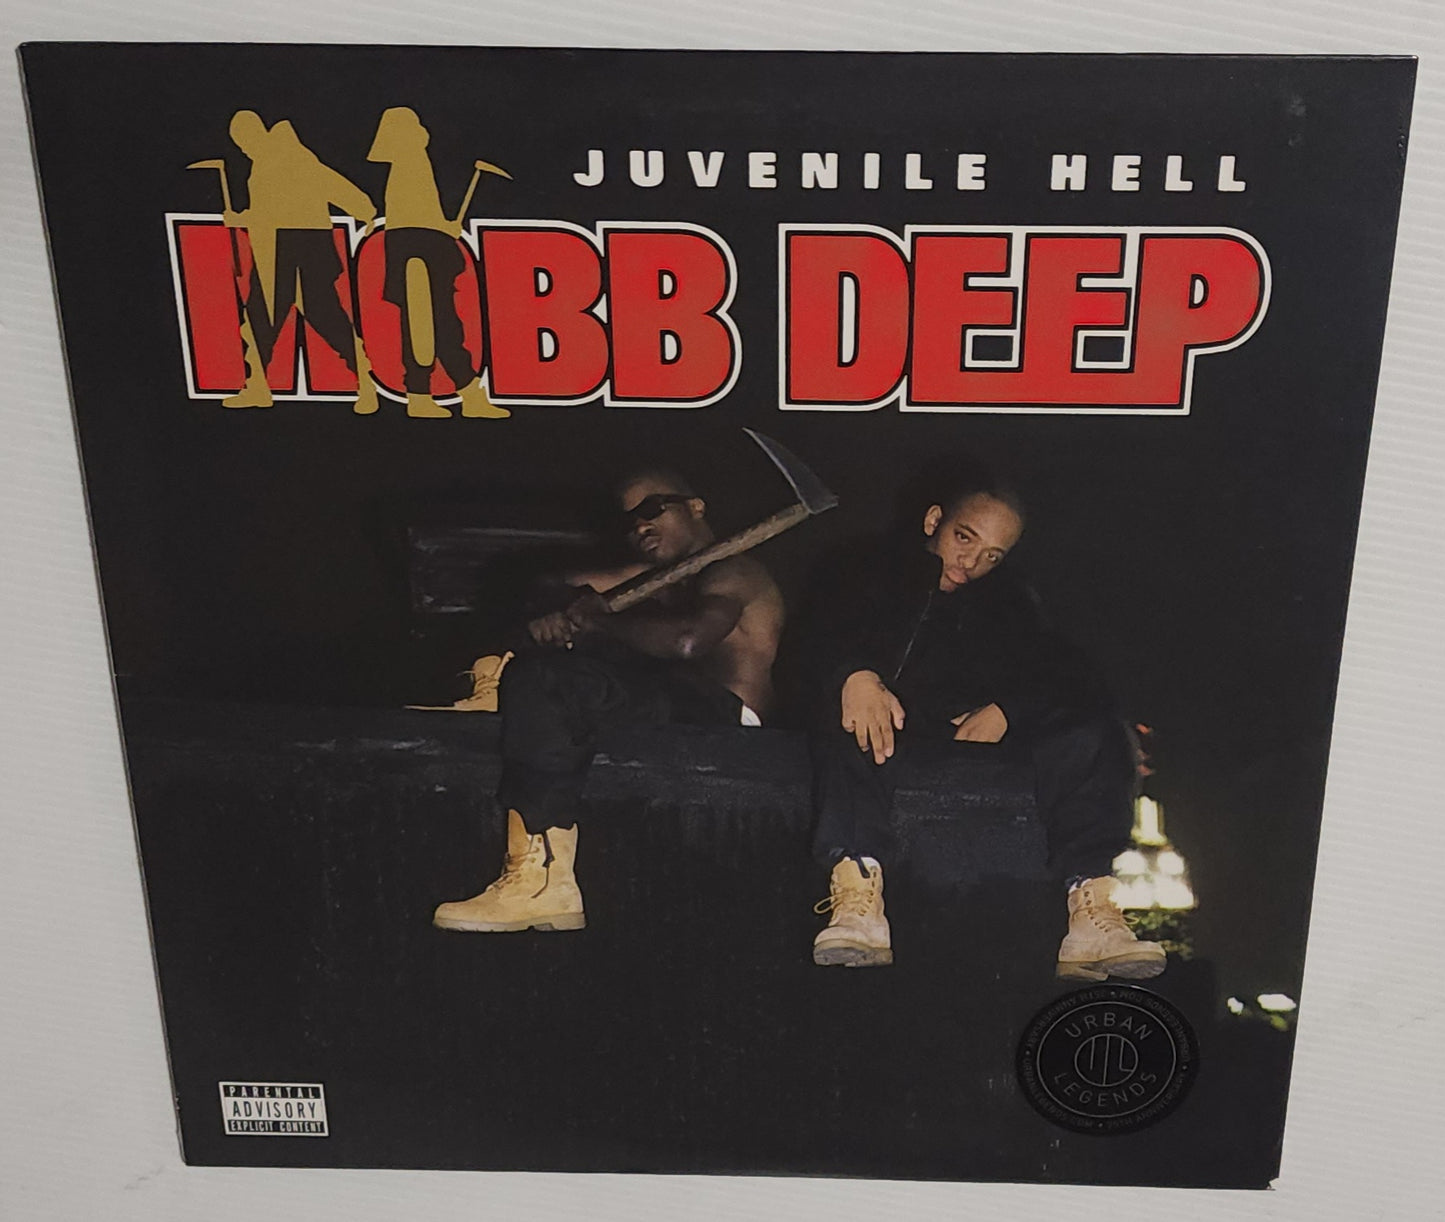 Mobb Deep - Juvenile Hell (2018 Reissue) (Vinyl LP)